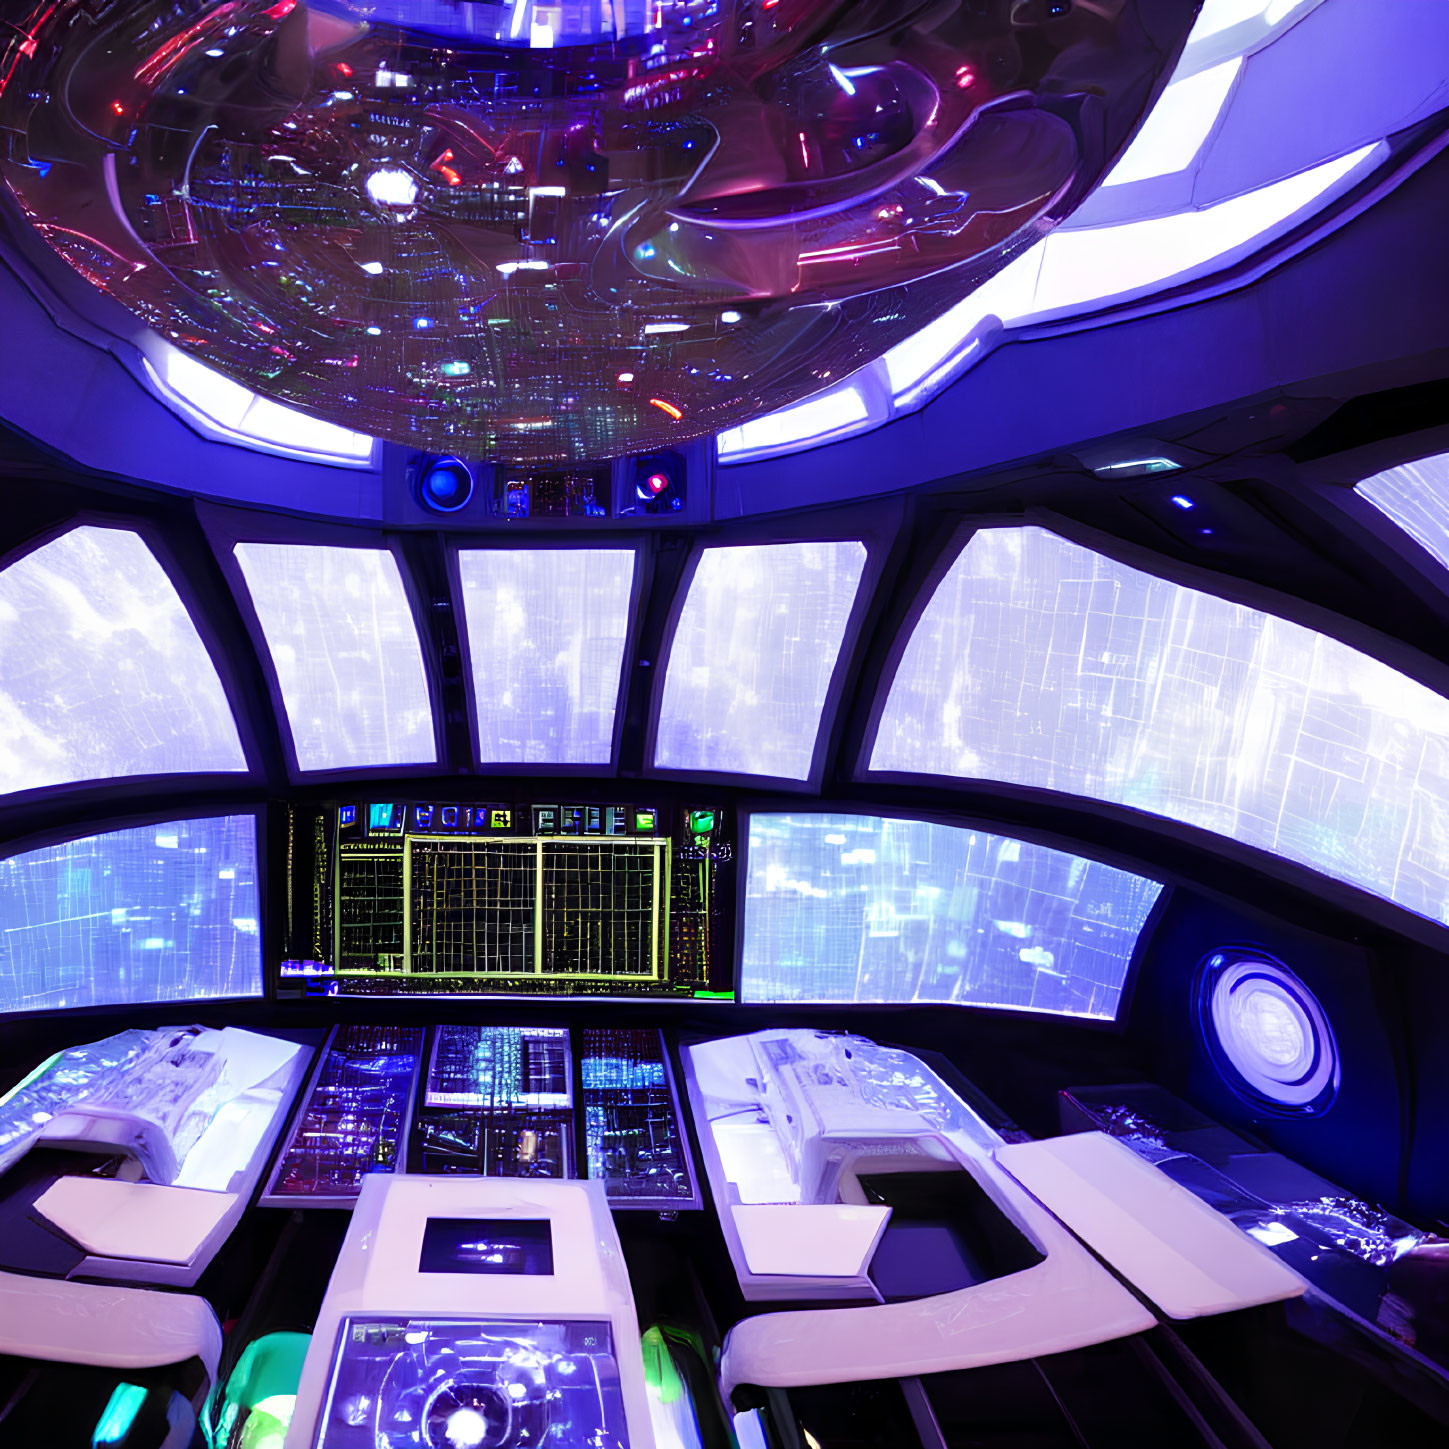 Futuristic Spaceship Bridge with Control Panels and Screens